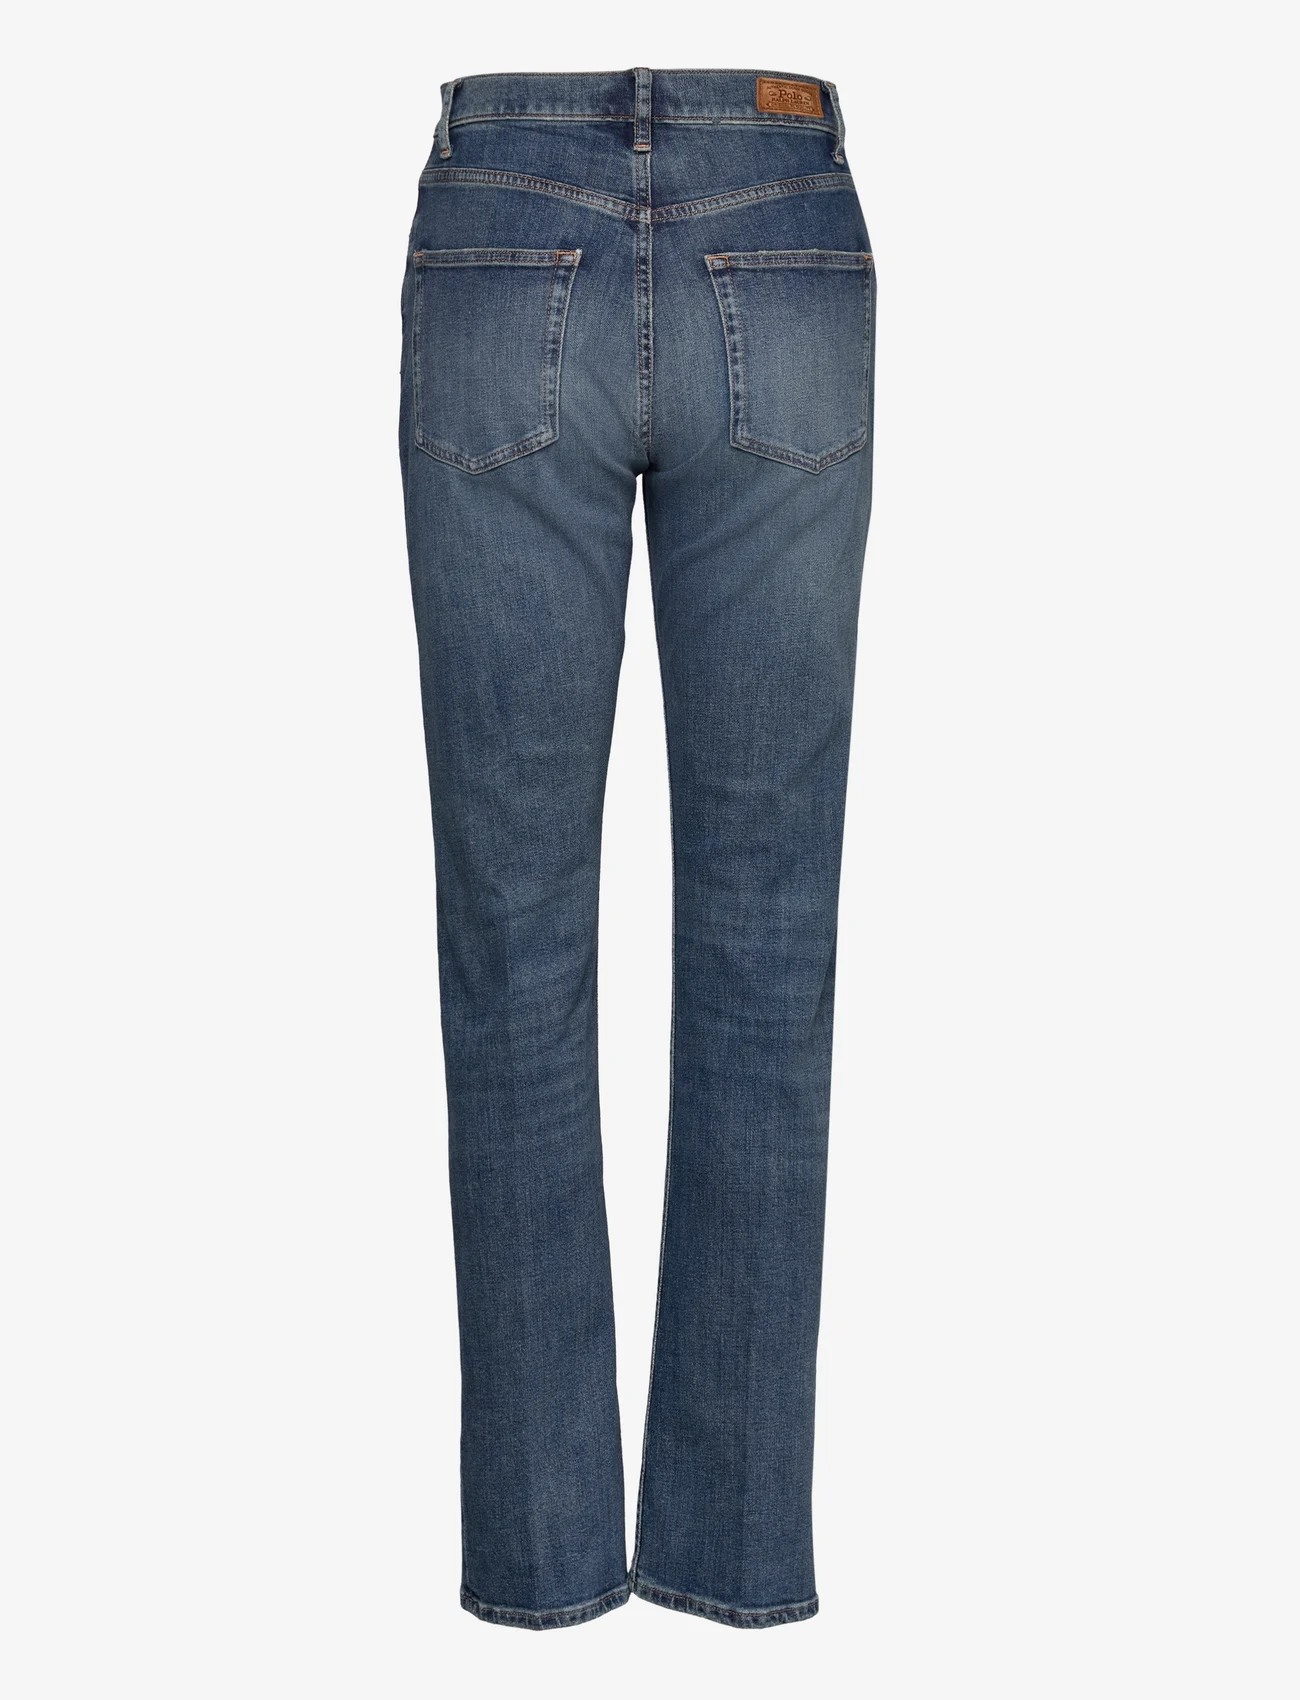 Polo Ralph Lauren - High-Rise Straight Jean - straight jeans - telesto wash - 1